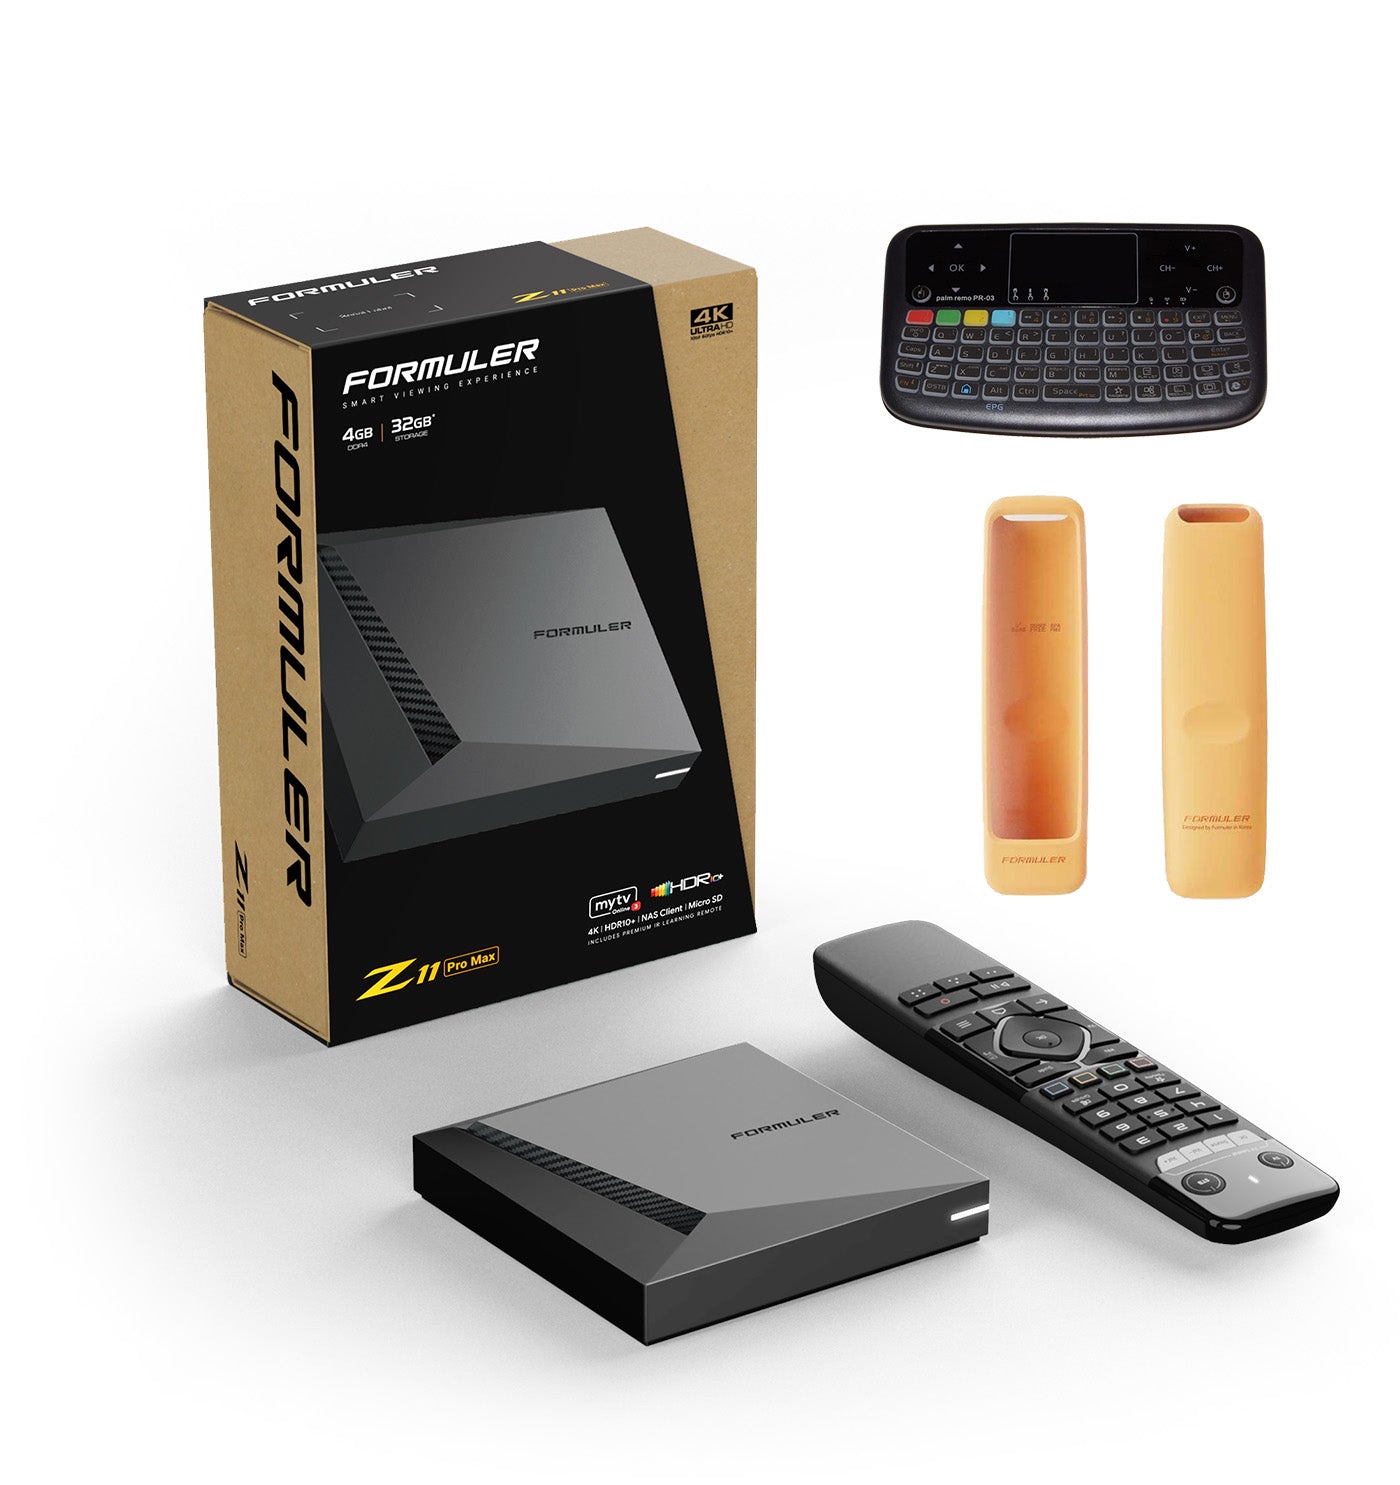 Formuler Z11 Pro Max + FREE ACCESSORIES: 1x orange remote cover + 1x Mini Keyboard